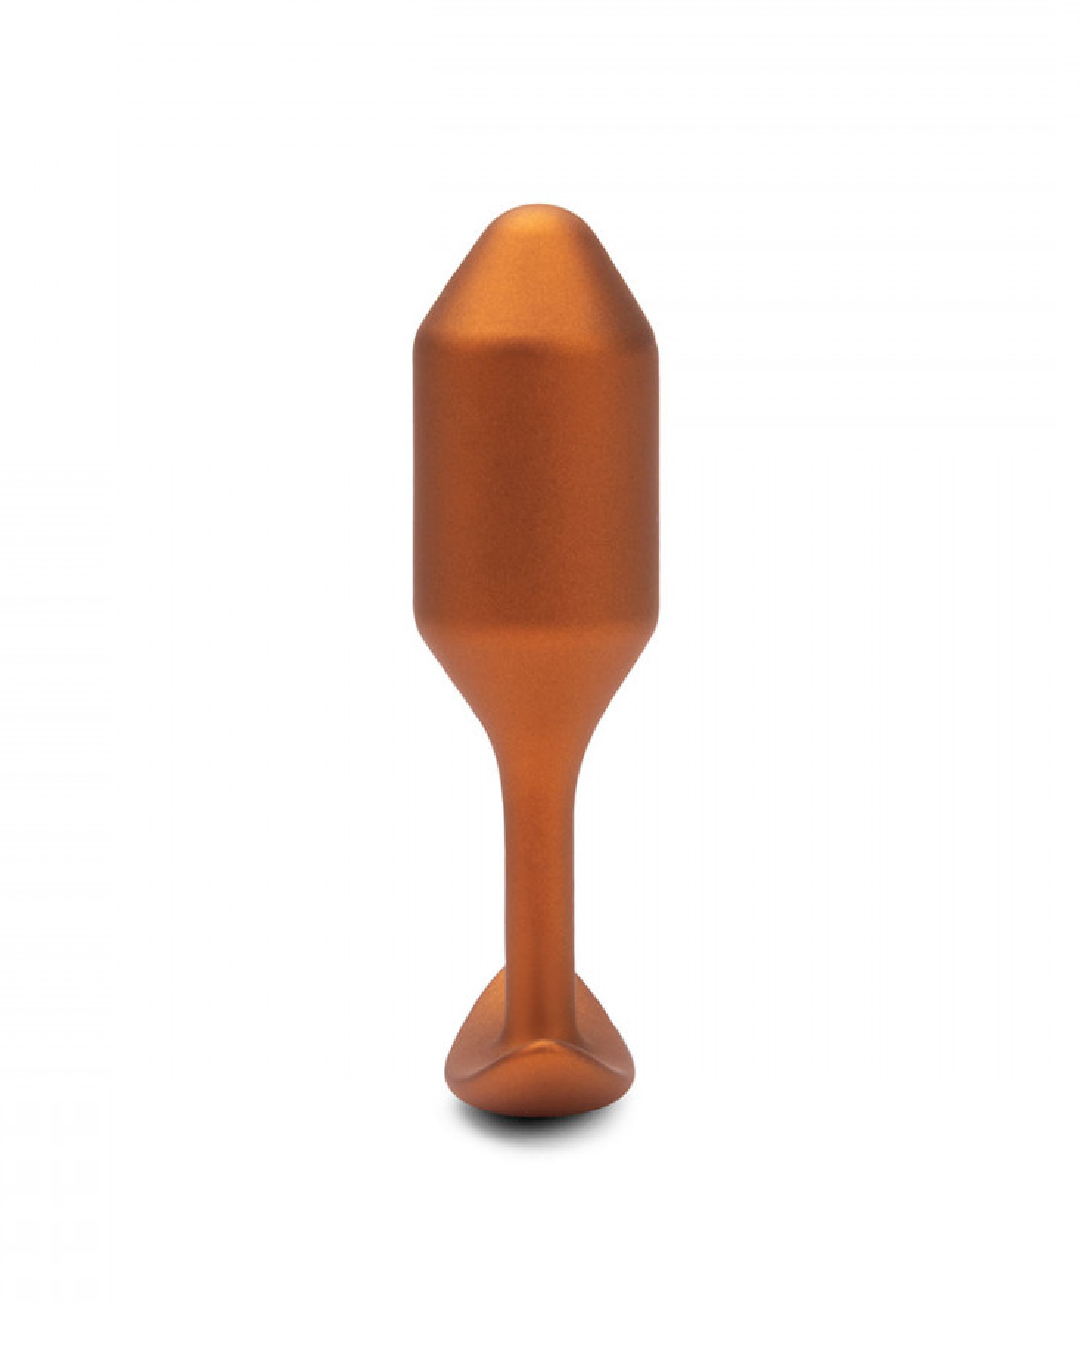 B-vibe Snug Plug 2 Weighted Silicone Butt Plug - 114 grams - Sunburst Orange side view